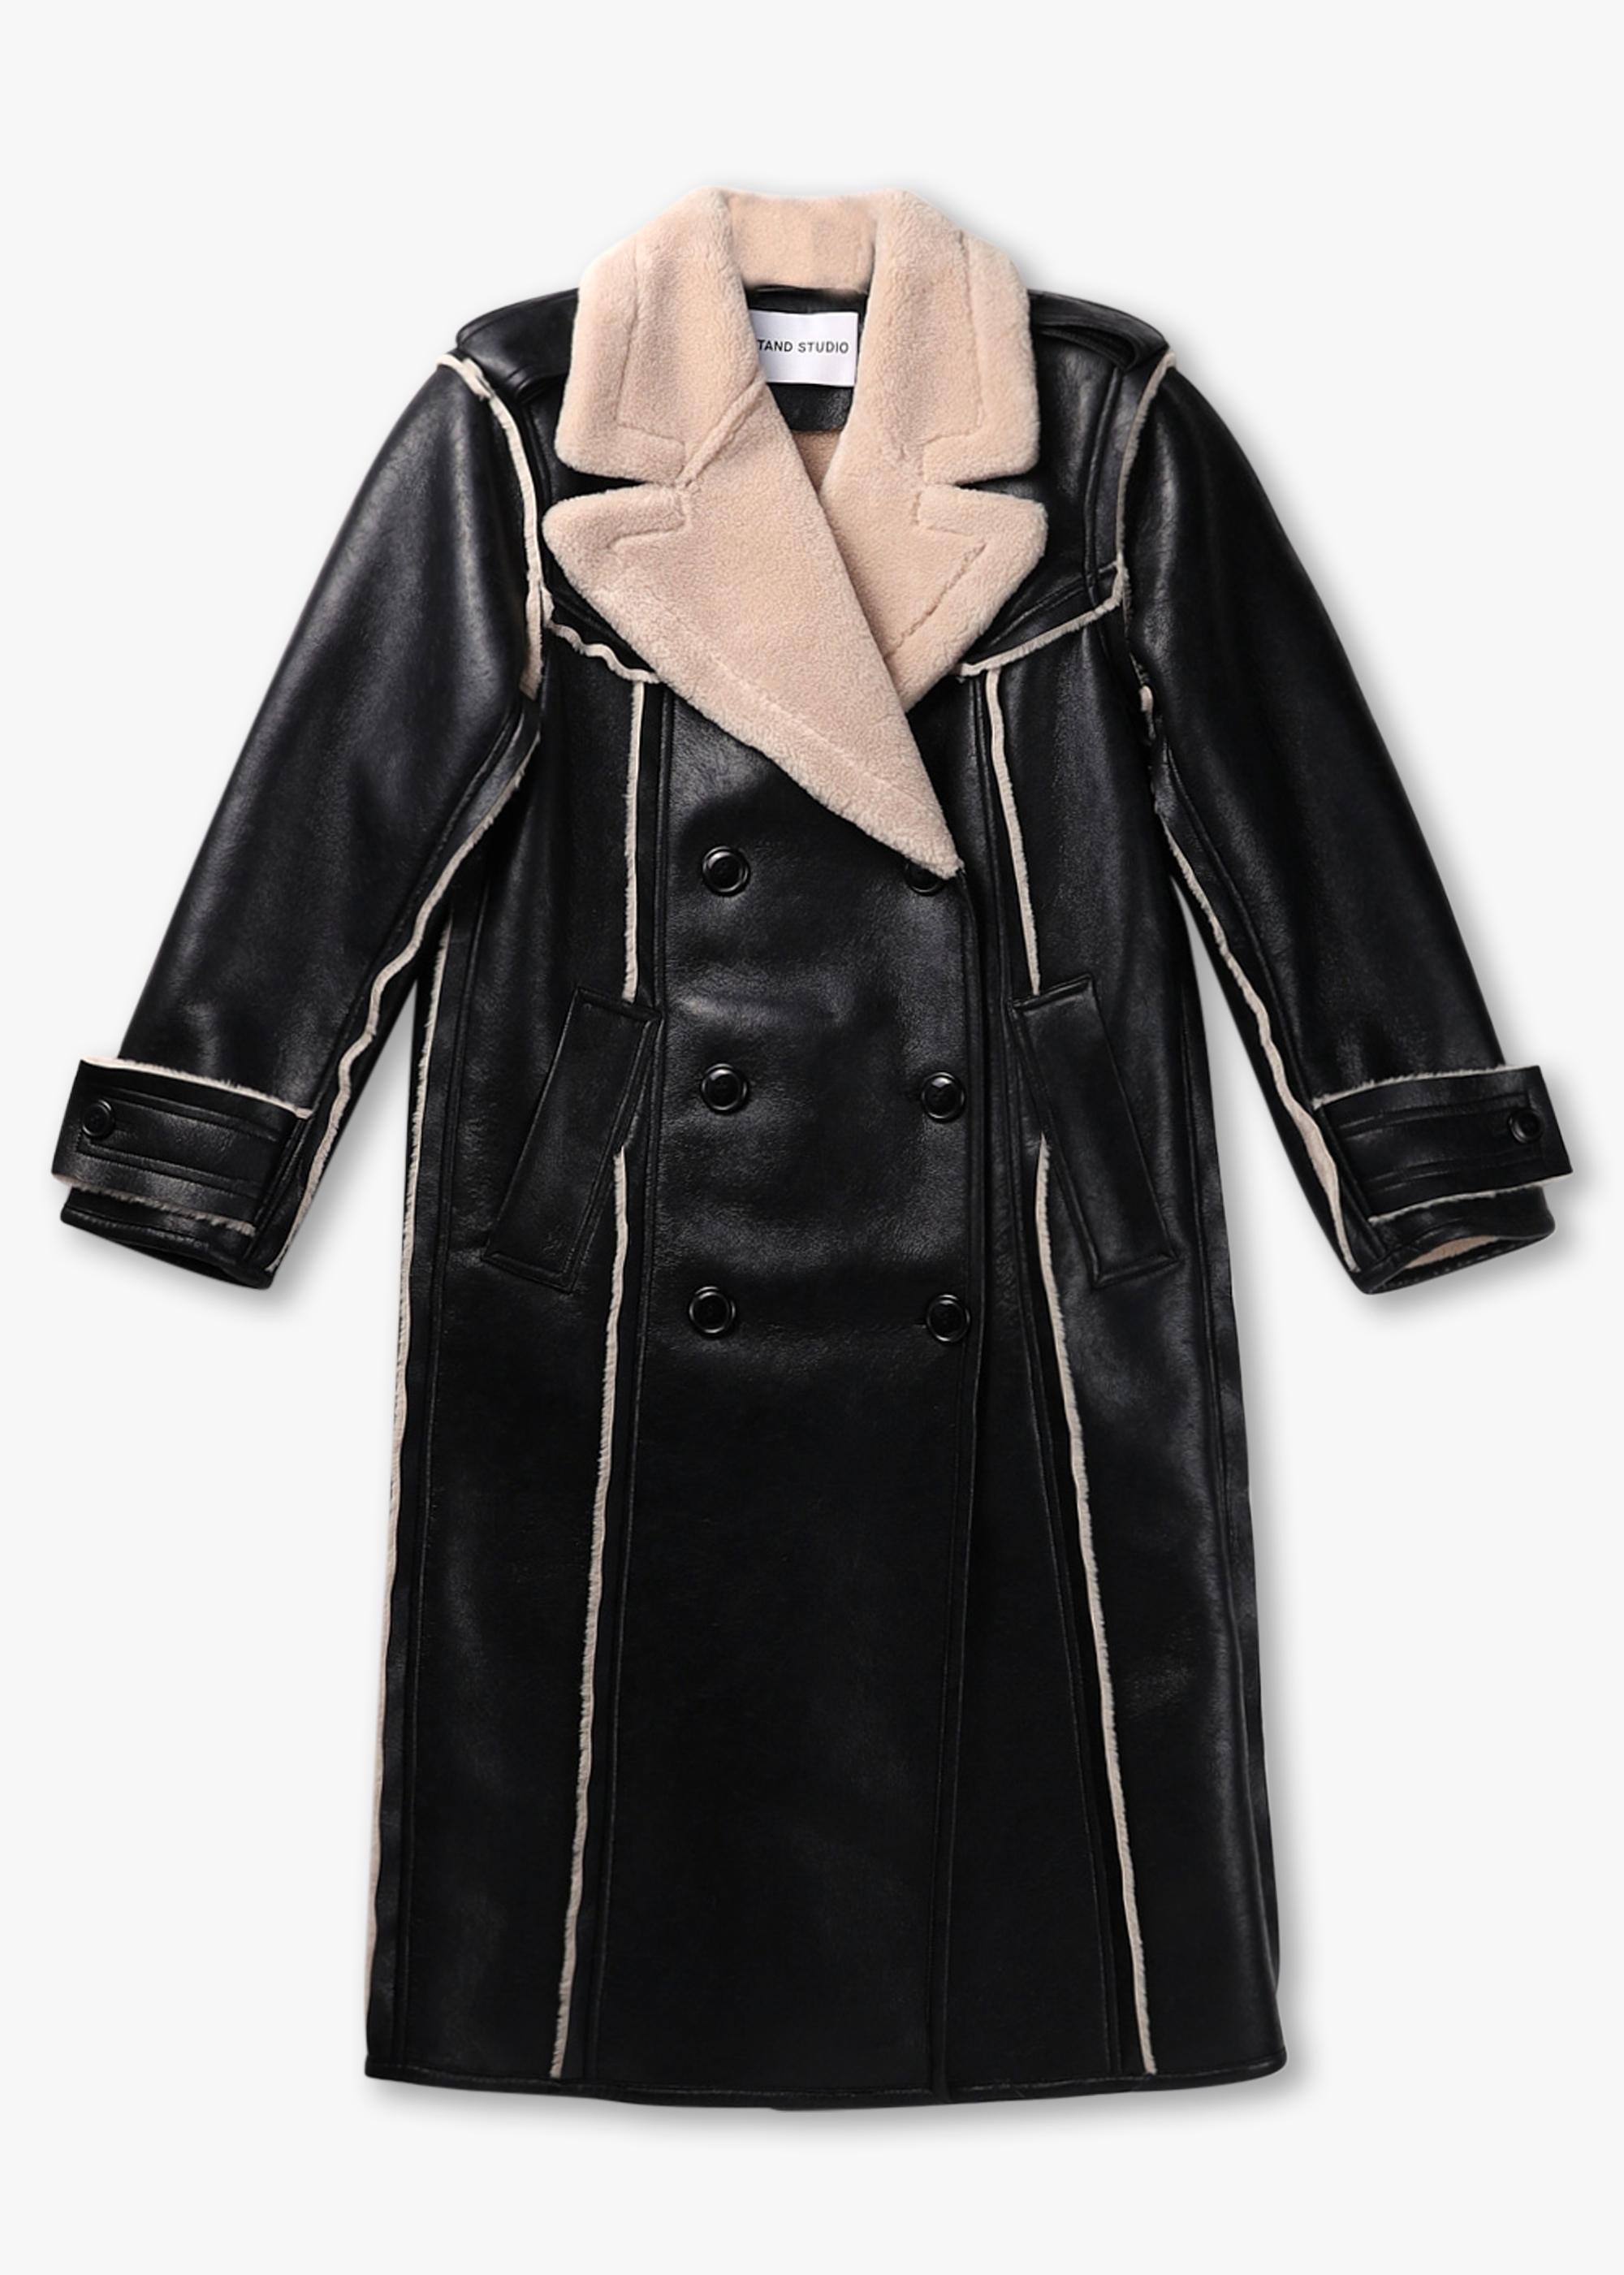 STAND STUDIO Womens Frankie Faux Leather Coat In Black/beige